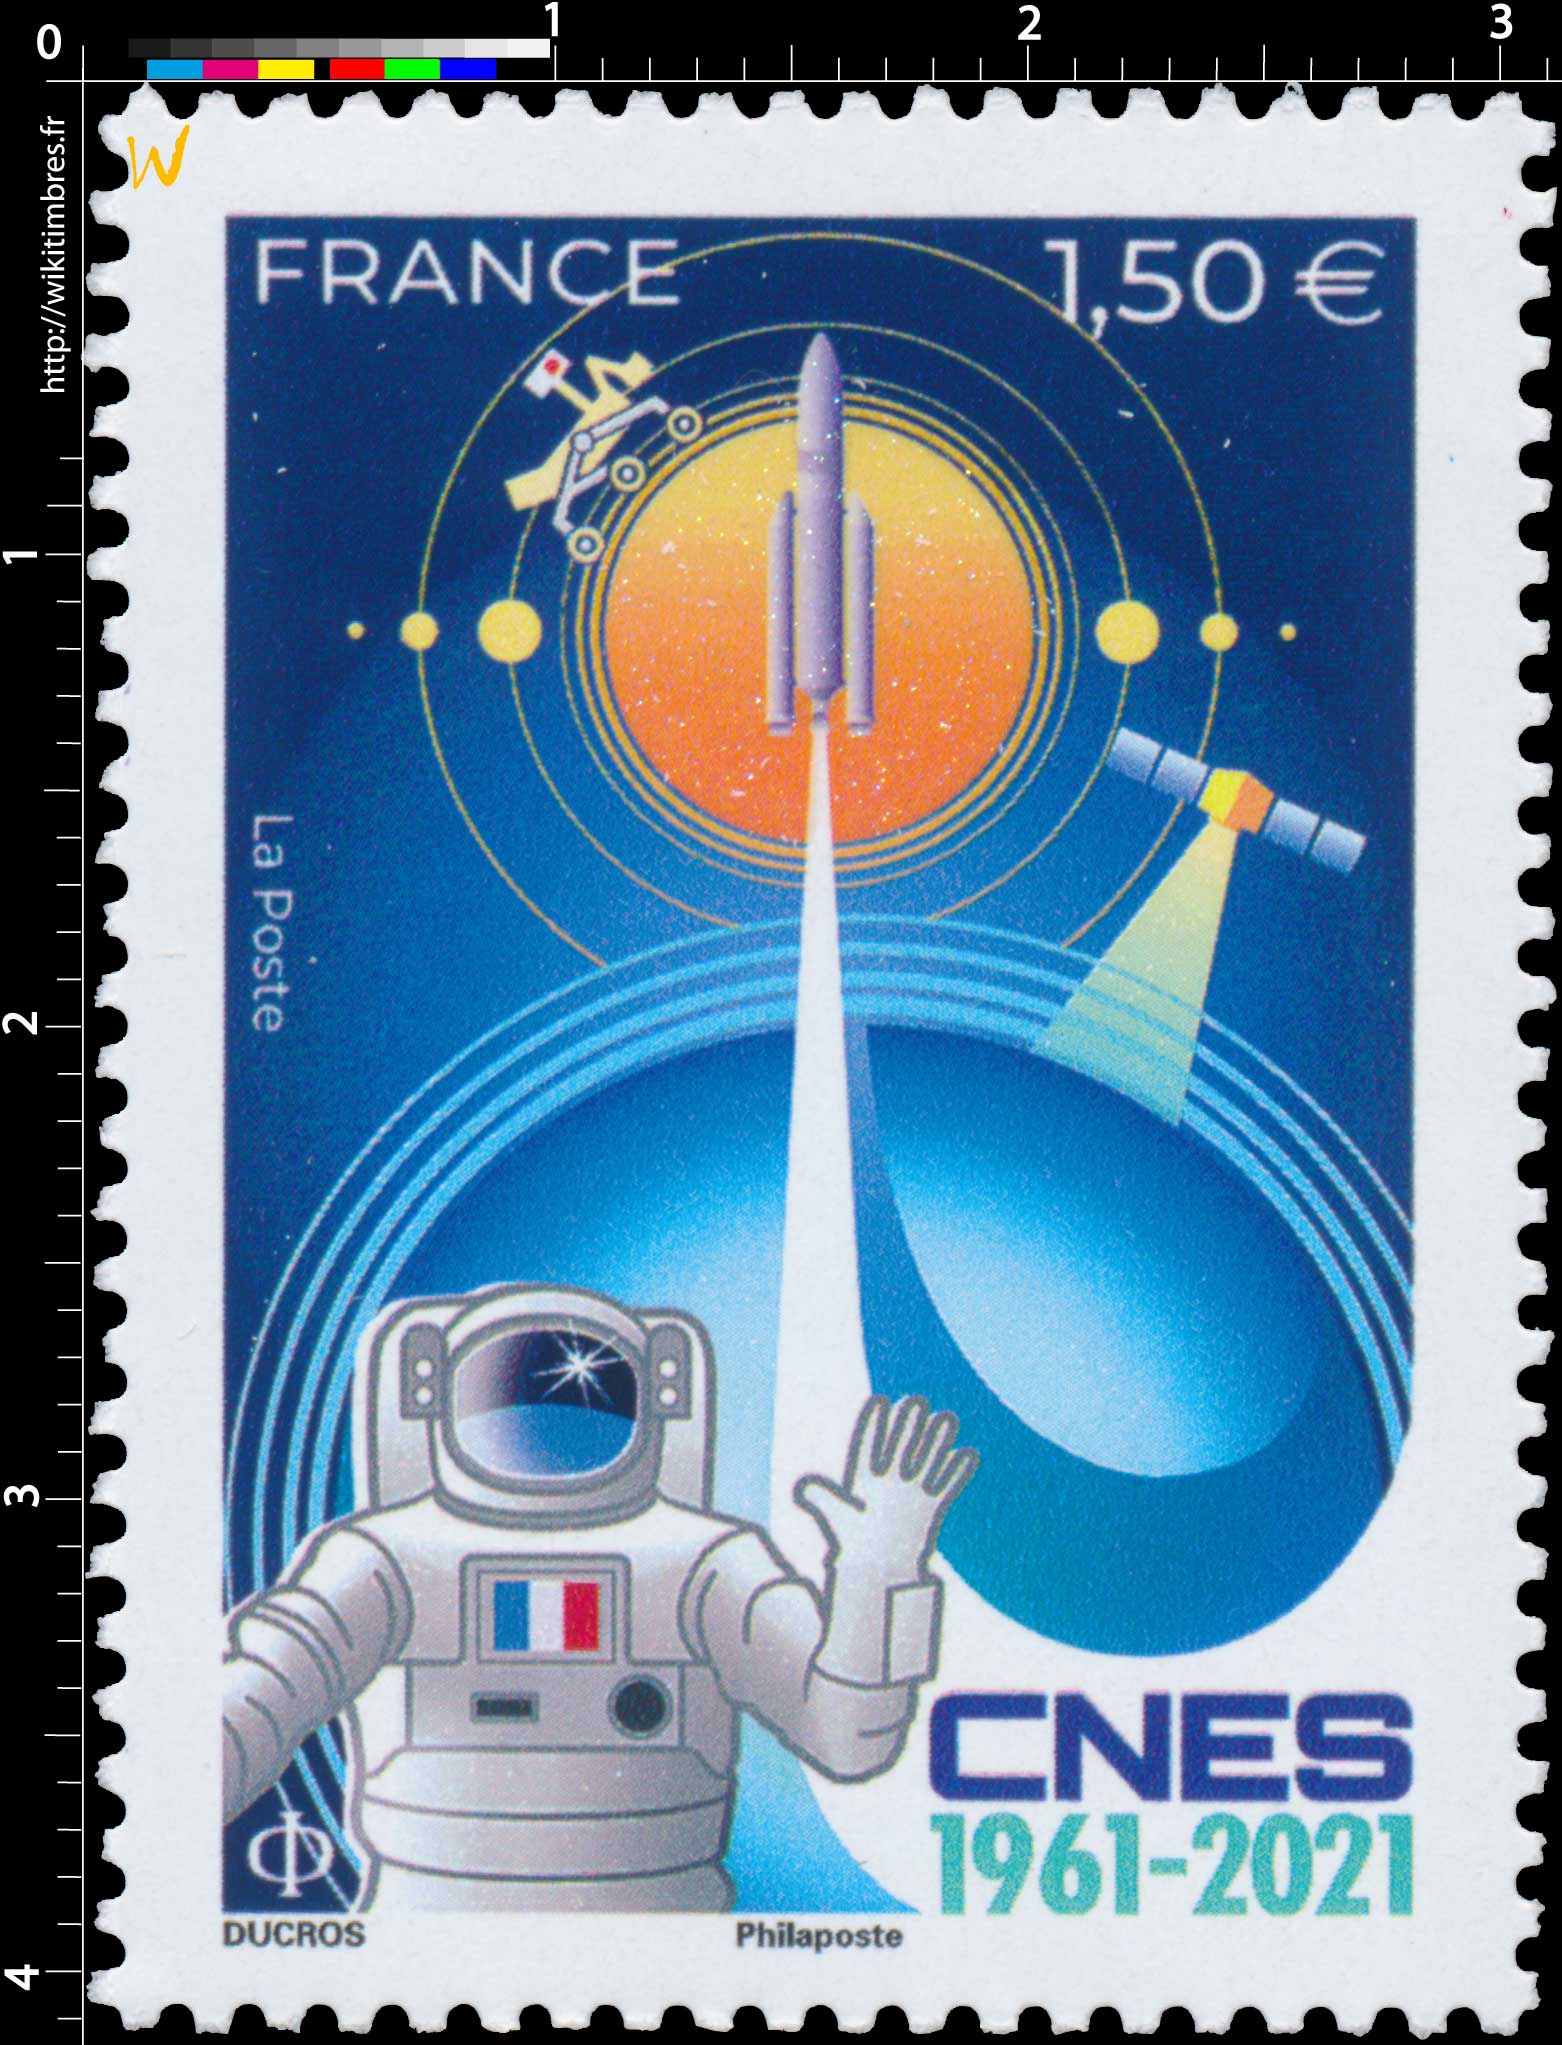 CNES 1961-2021 